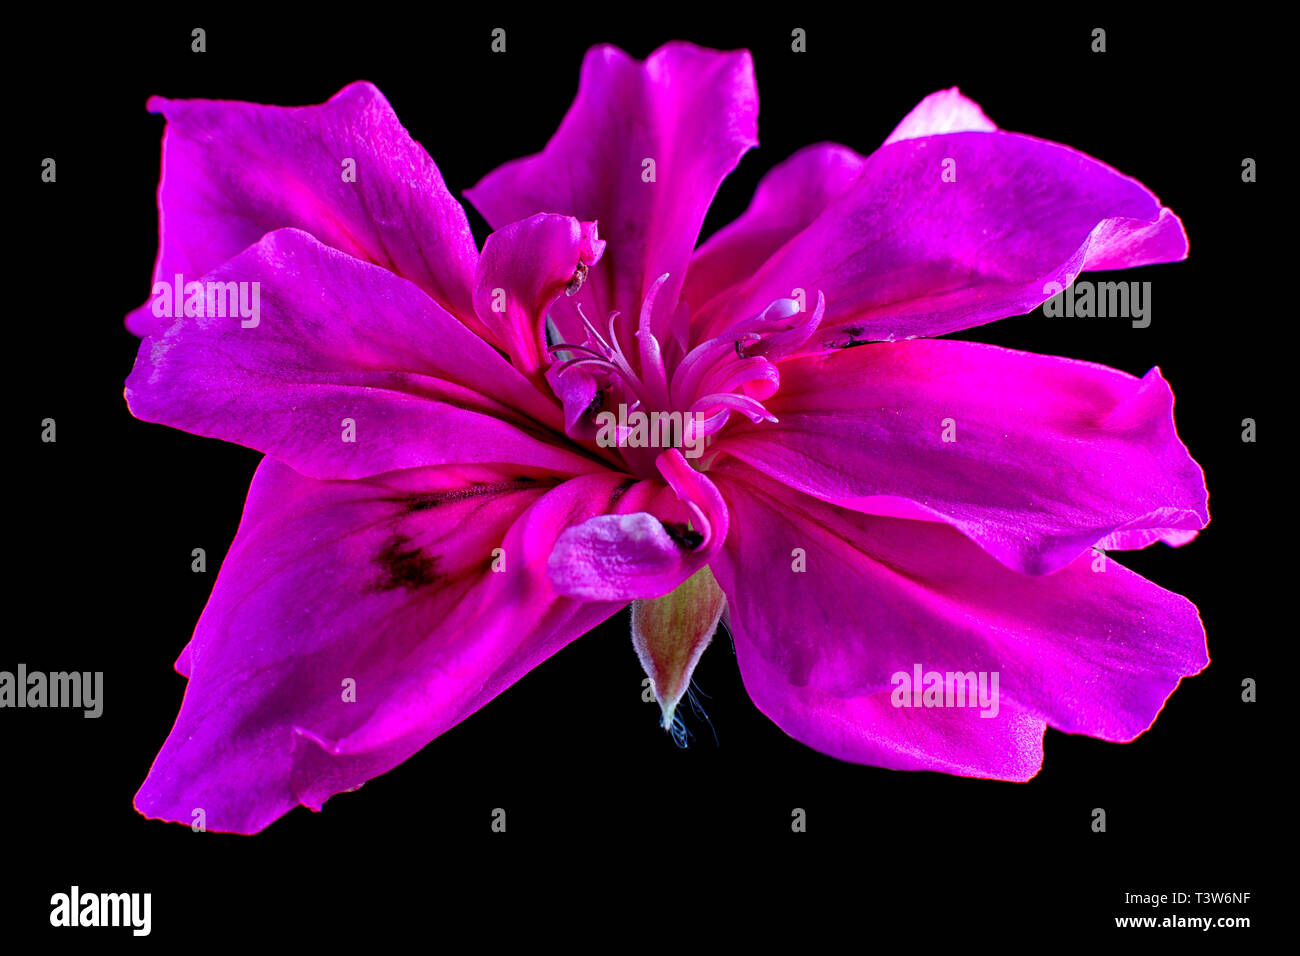 pink flower macro details Stock Photo